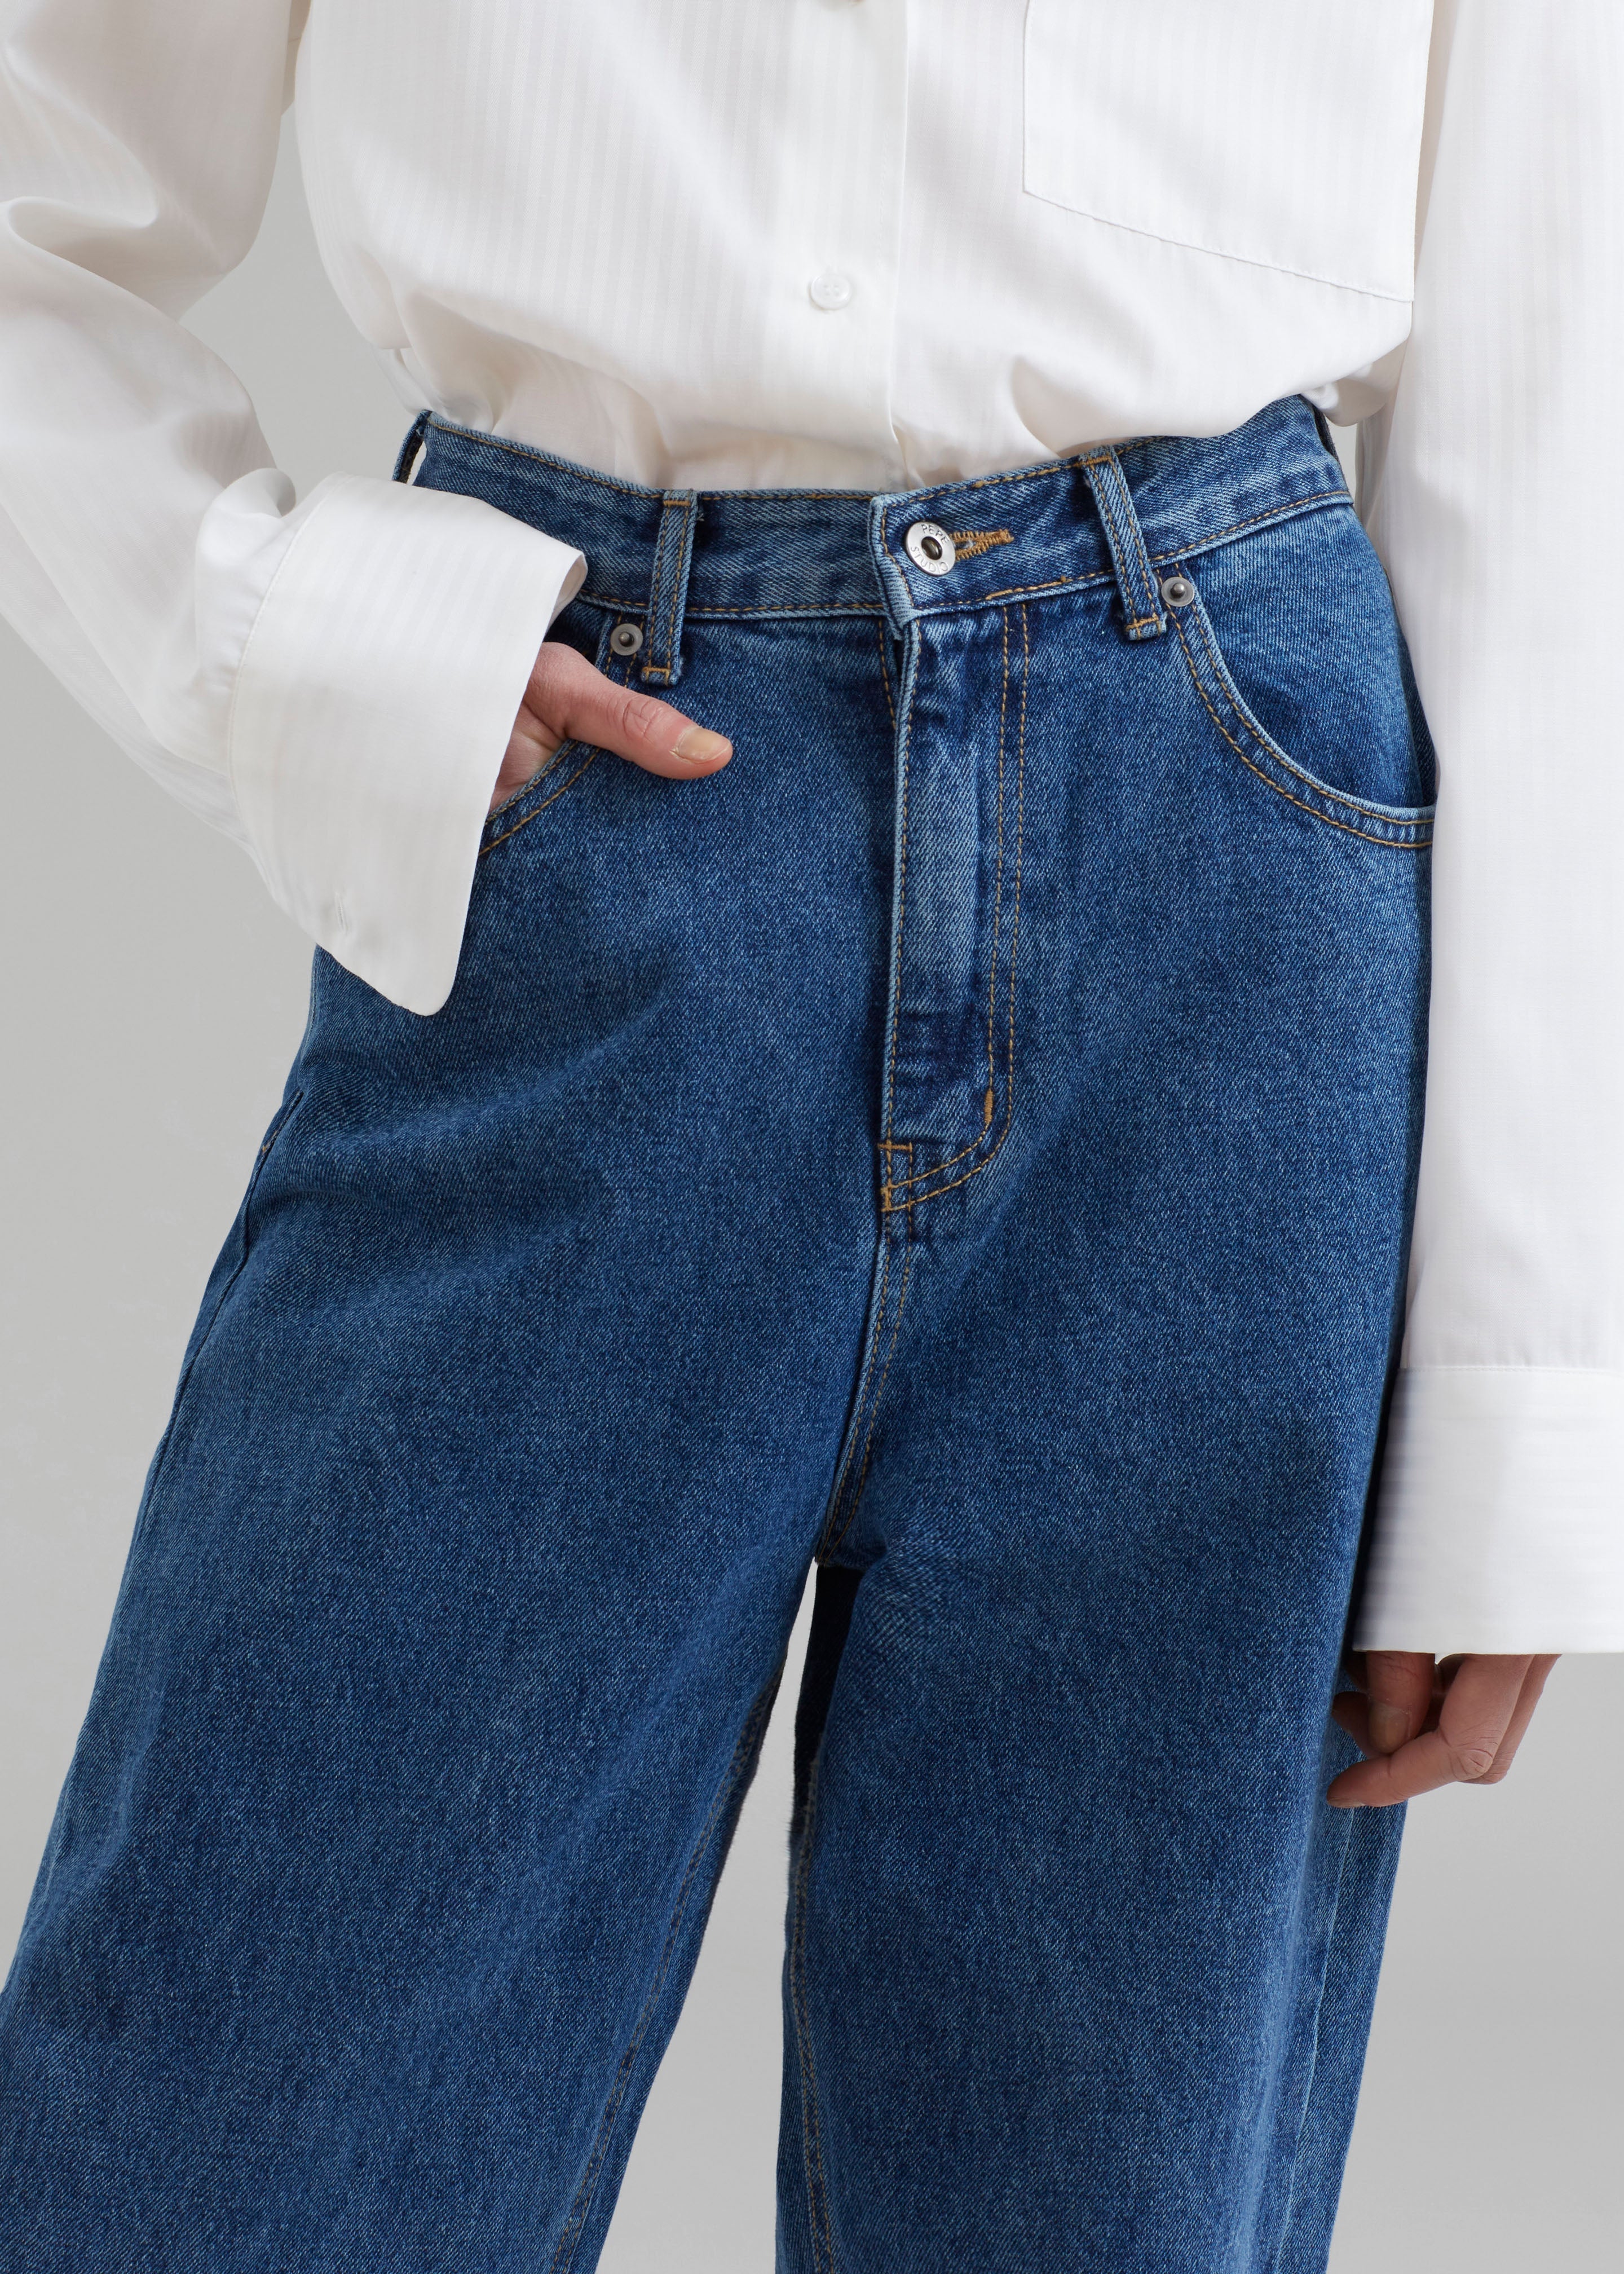 Alabama Jeans - Medium Wash - 2